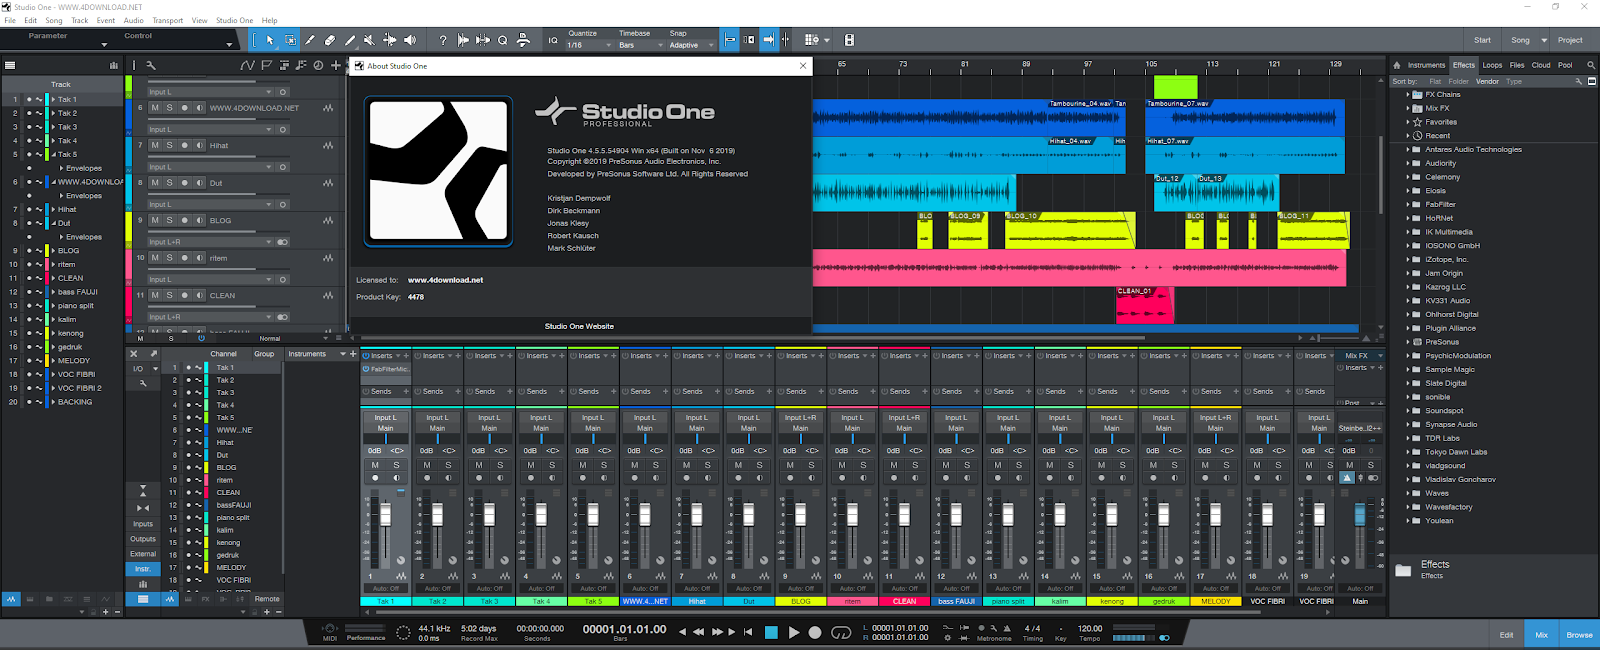 PreSonus Studio One 4 Professional 4.6.1 download free